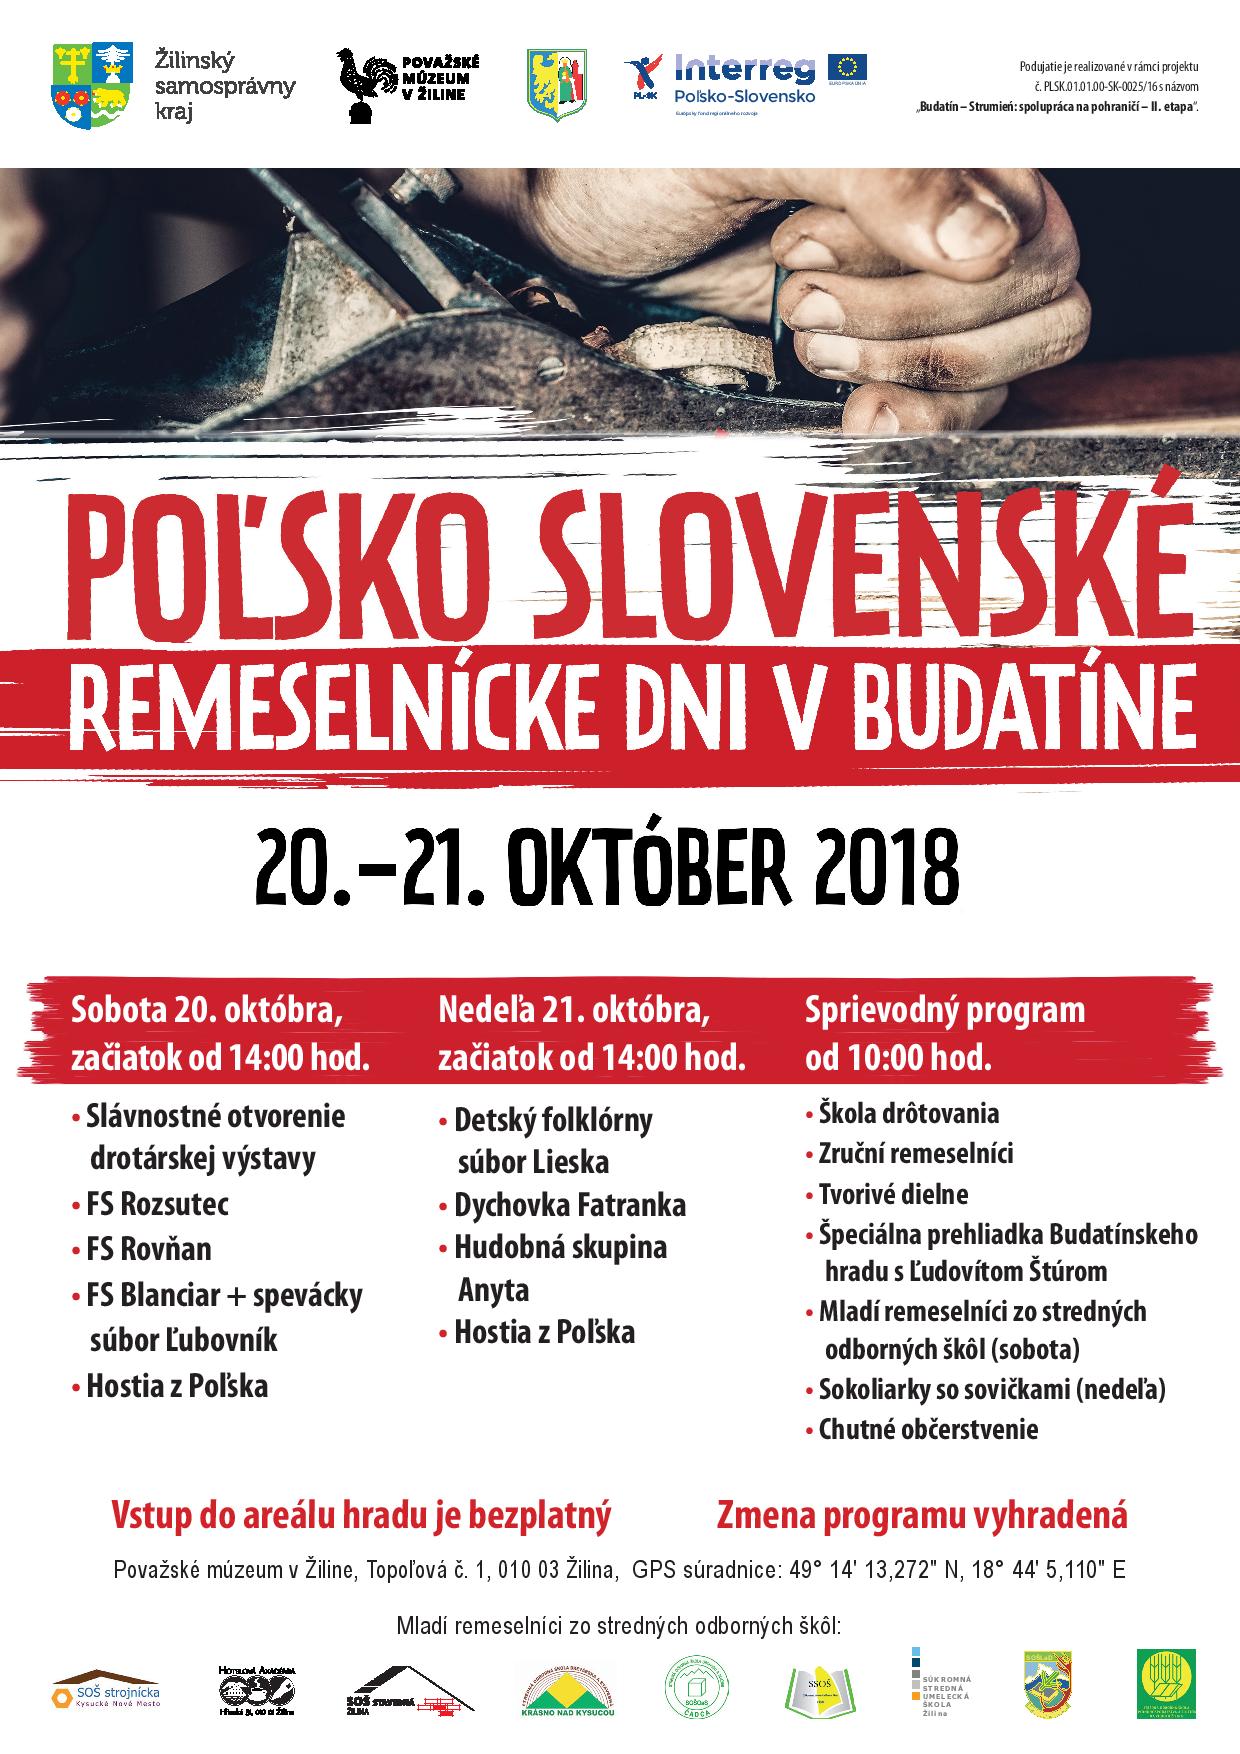 Posko-slovensk remeselncke dni 2018 ilina